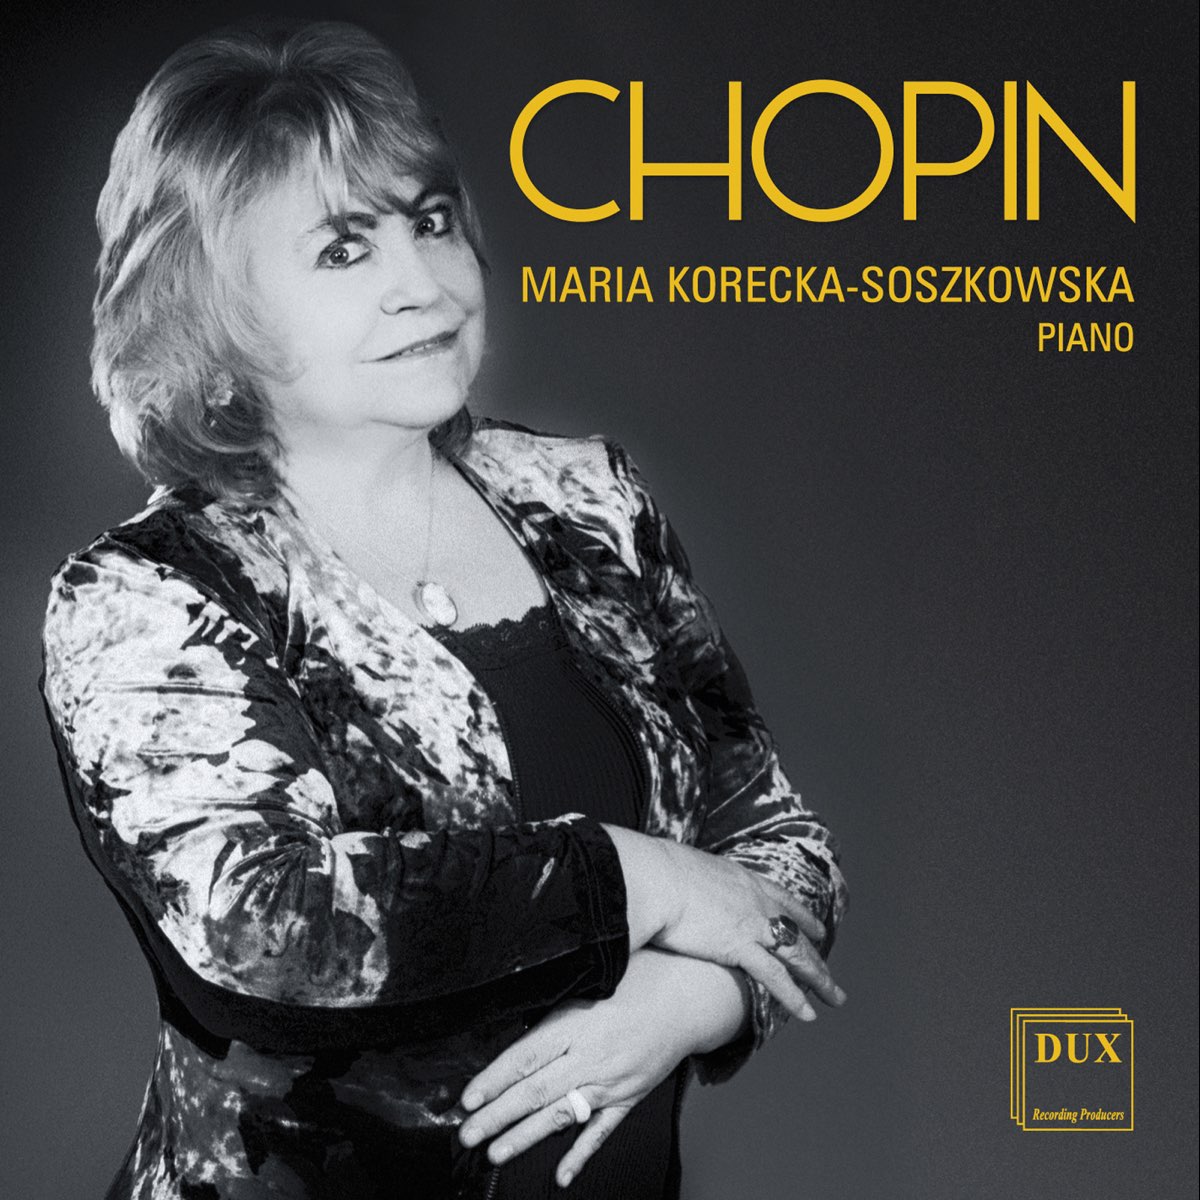 ‎Chopin: 24 Preludes, Op. 28 by Maria Korecka-Soszkowska on Apple Music